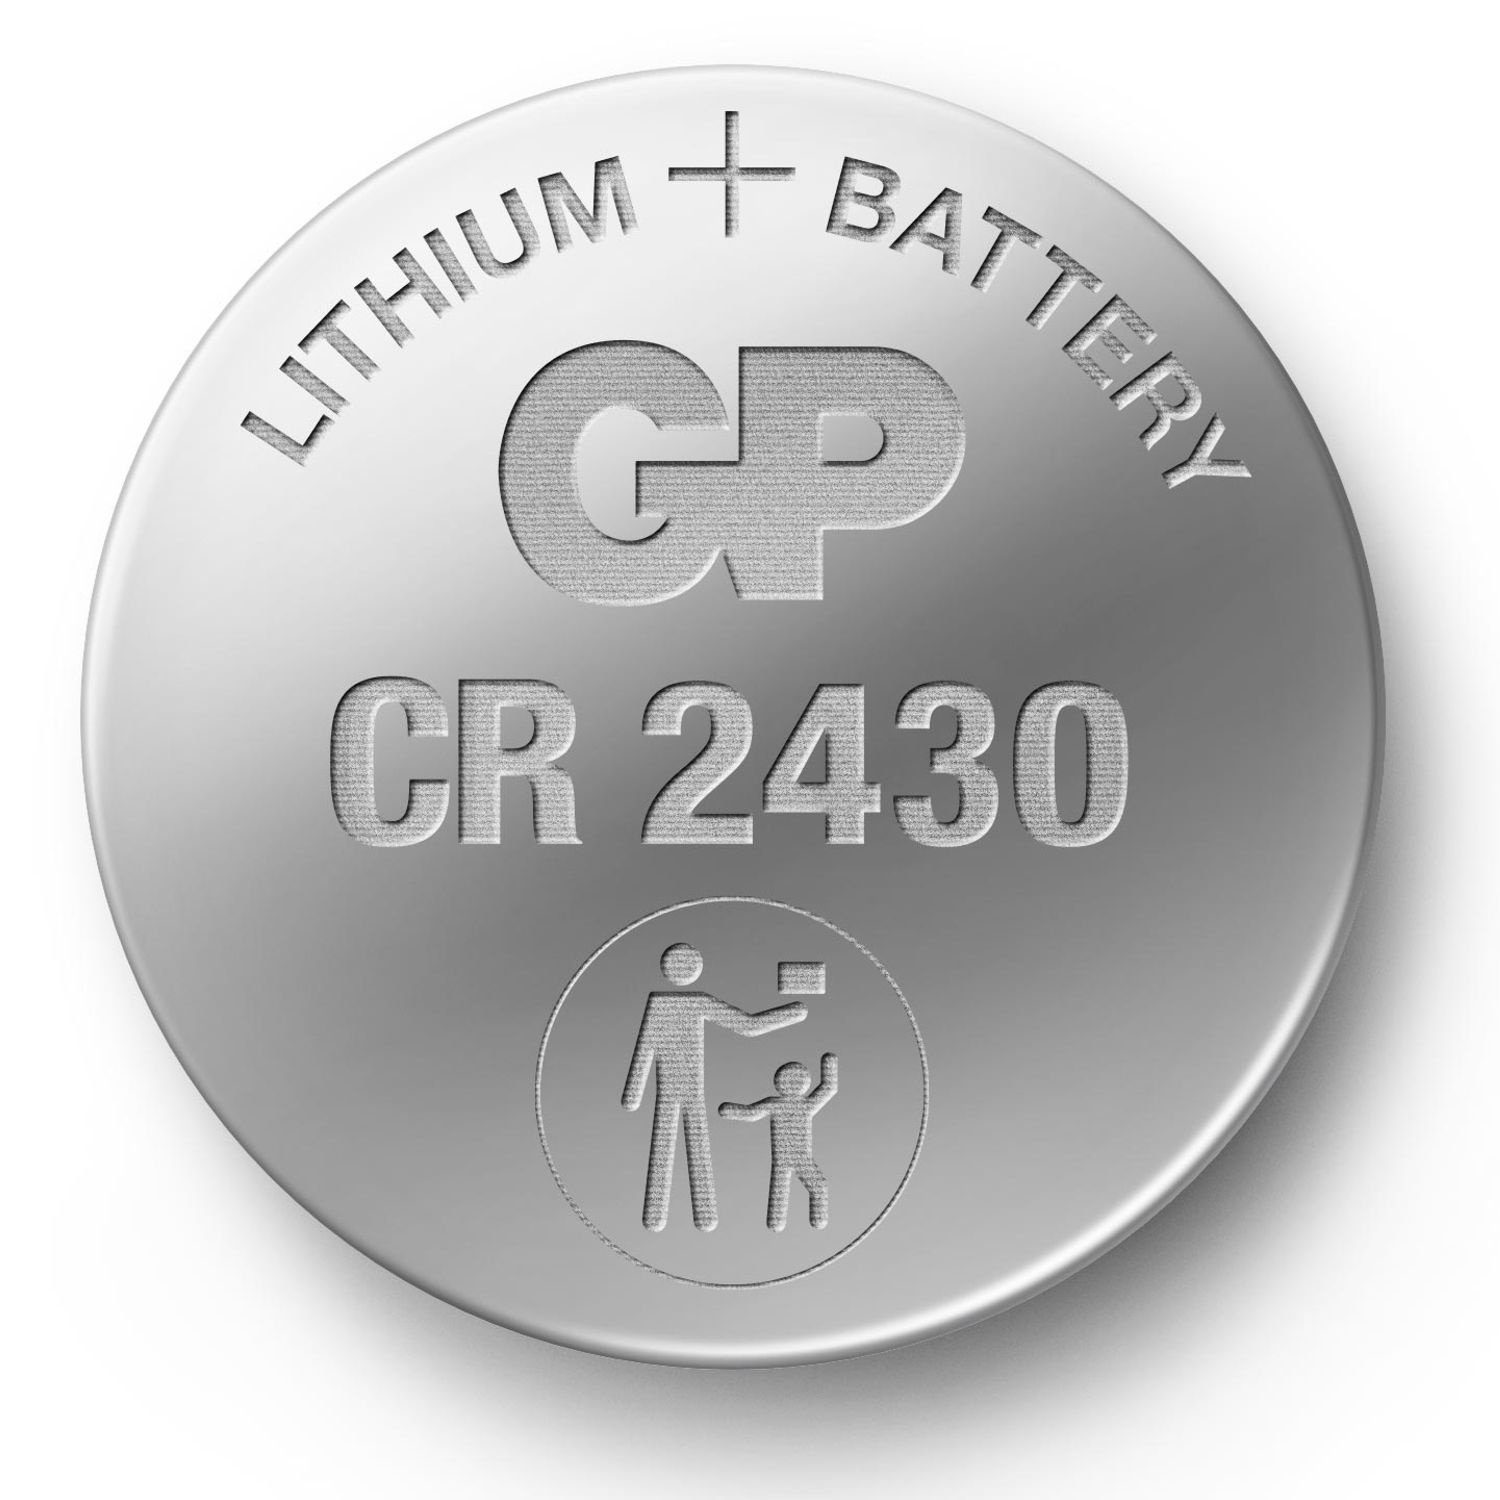 GP GP (3 CR2430 V) Batteries Knopfzelle Lithium Batterie, 3V Volt